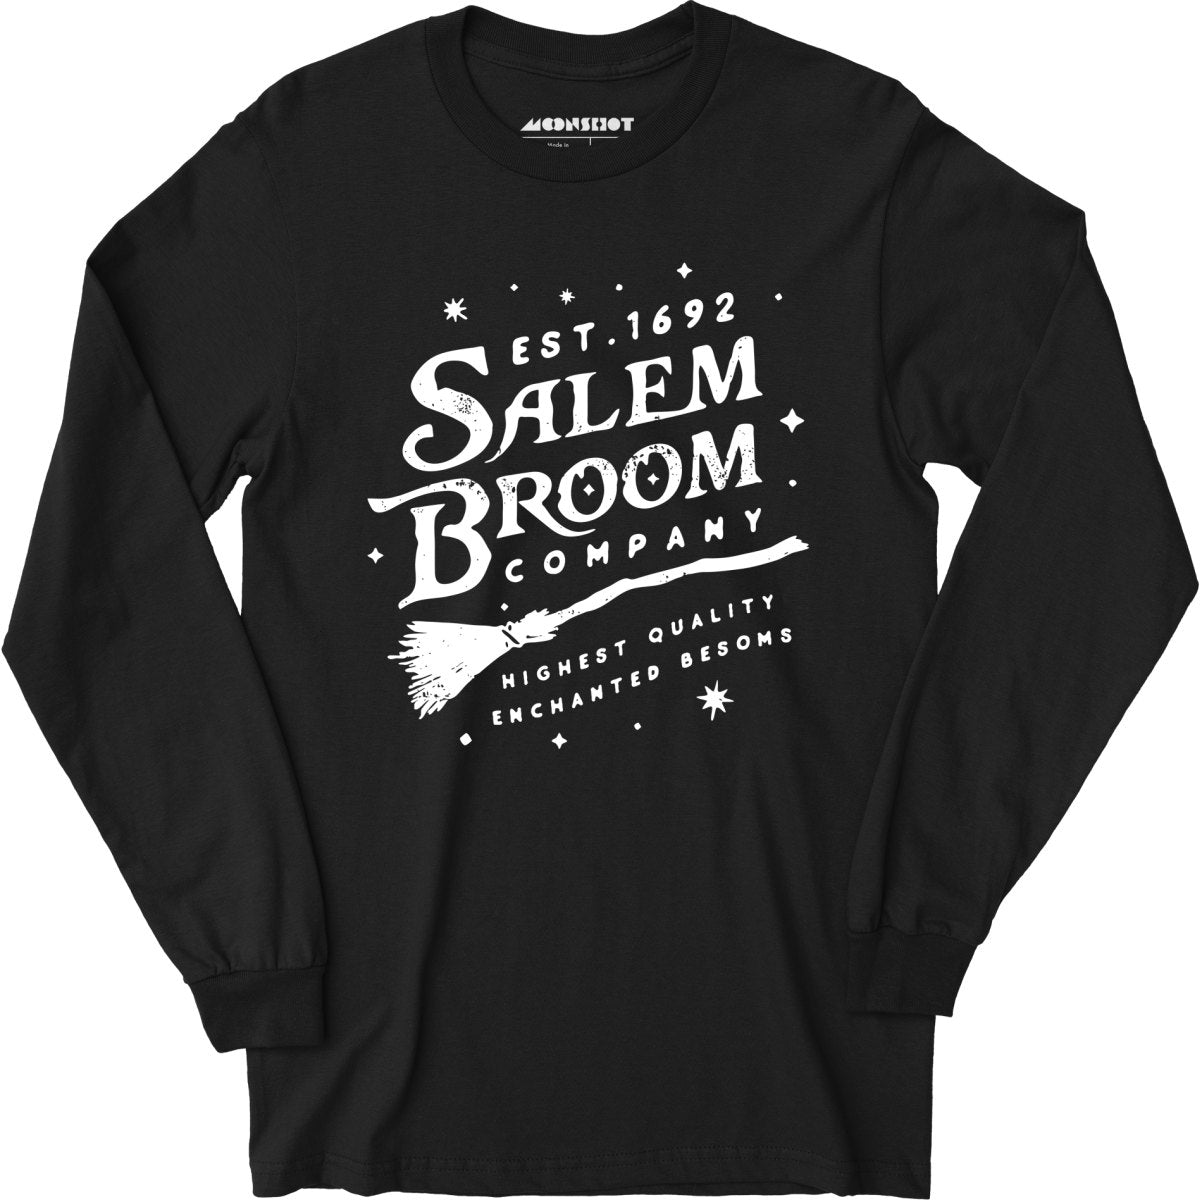 Salem Broom Company - Long Sleeve T-Shirt